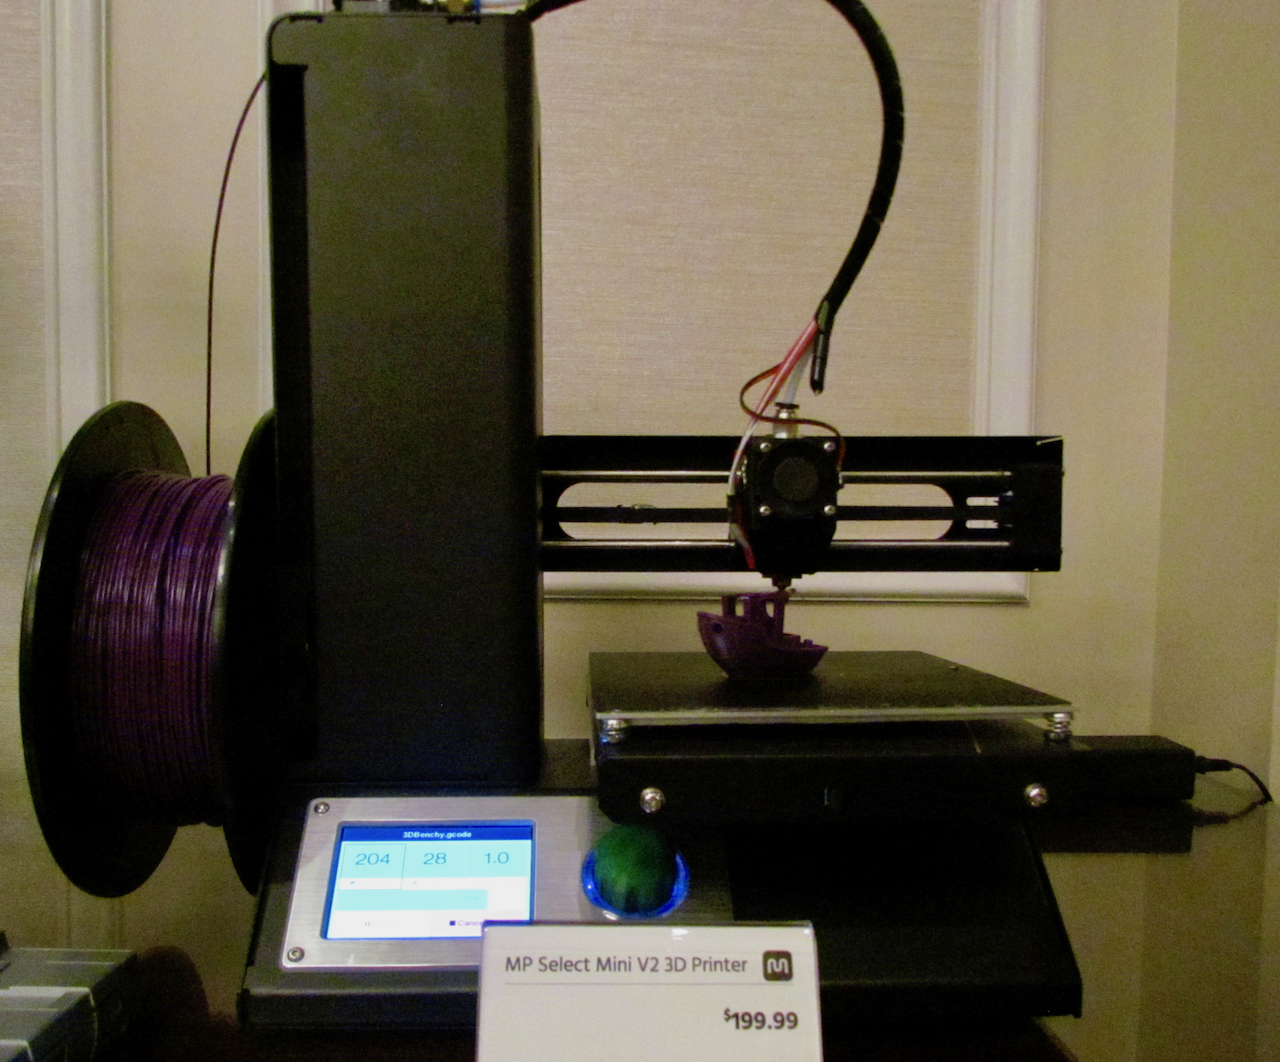  The new Monoprice Select Mini V2 desktop 3D printer 